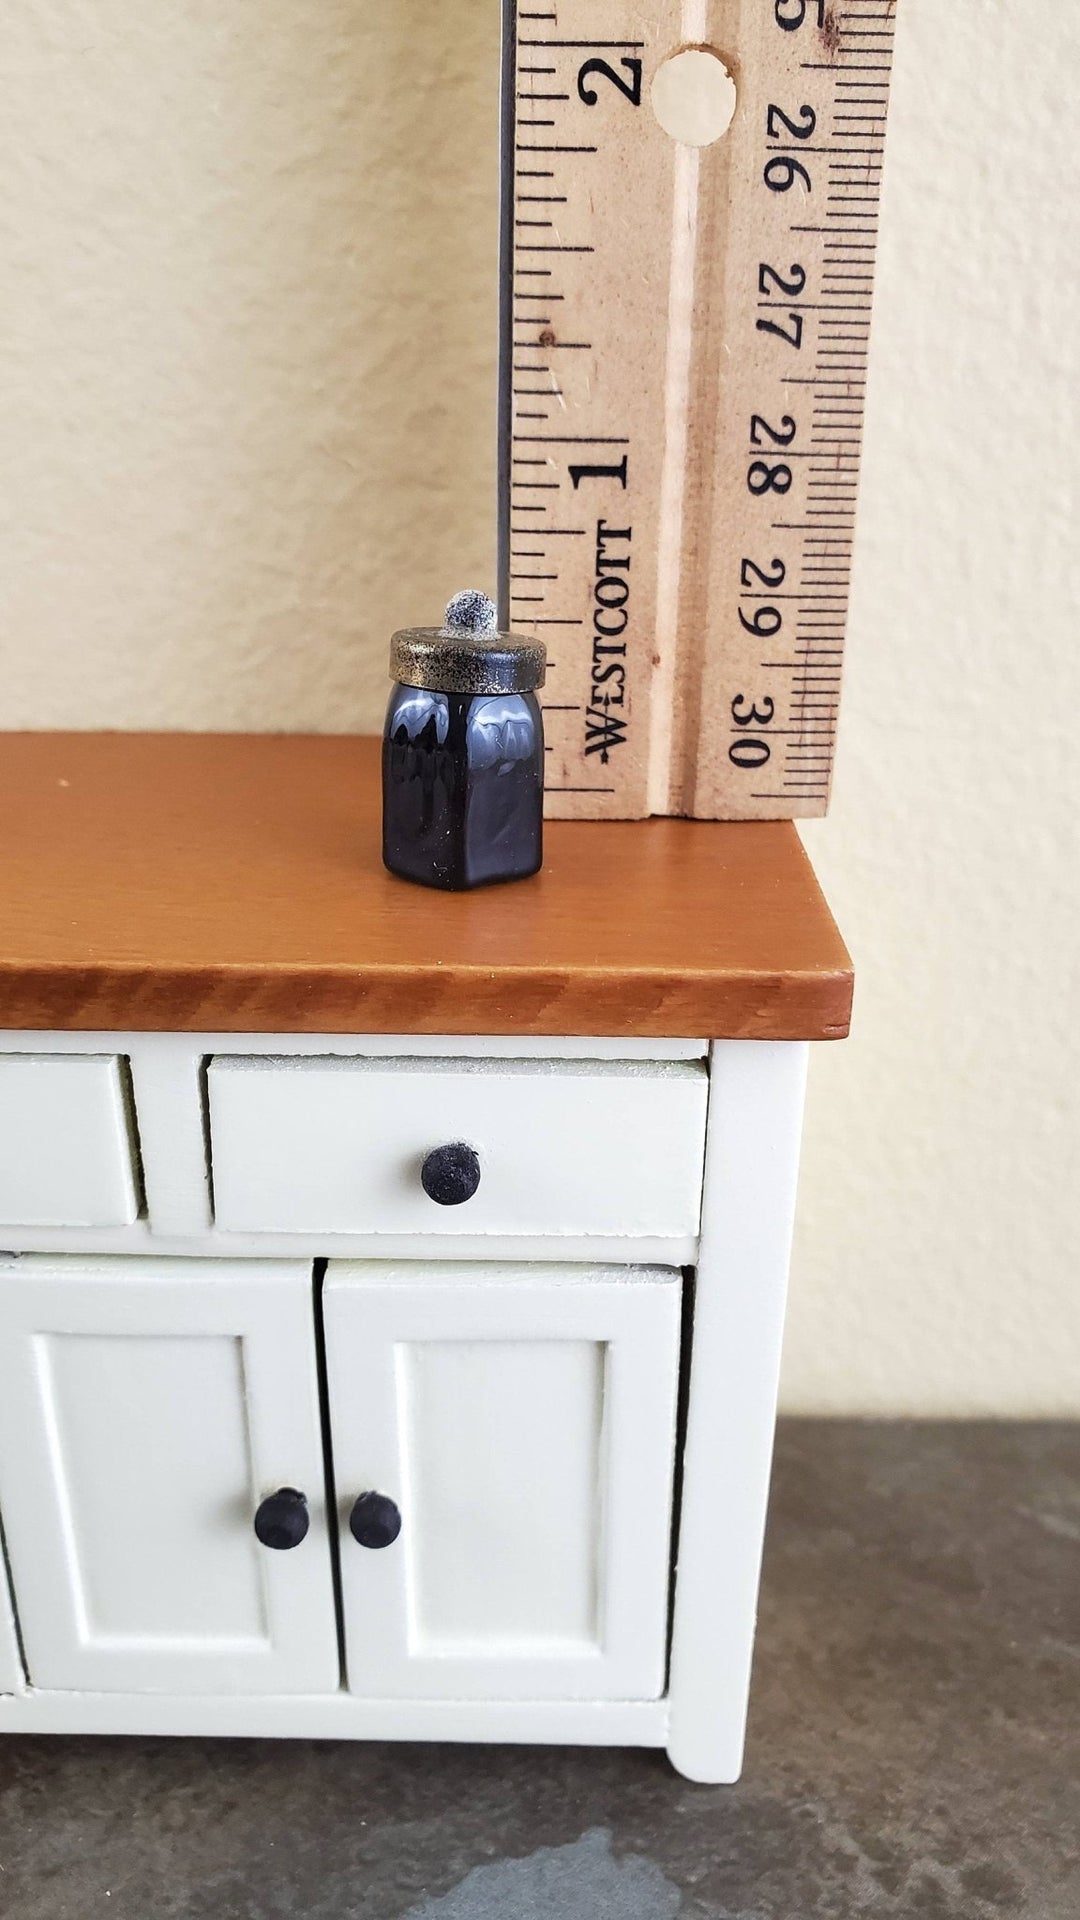 Dollhouse Miniature Black Glass Hexagon Jar with Removable Lid 1:12 Scale - Miniature Crush